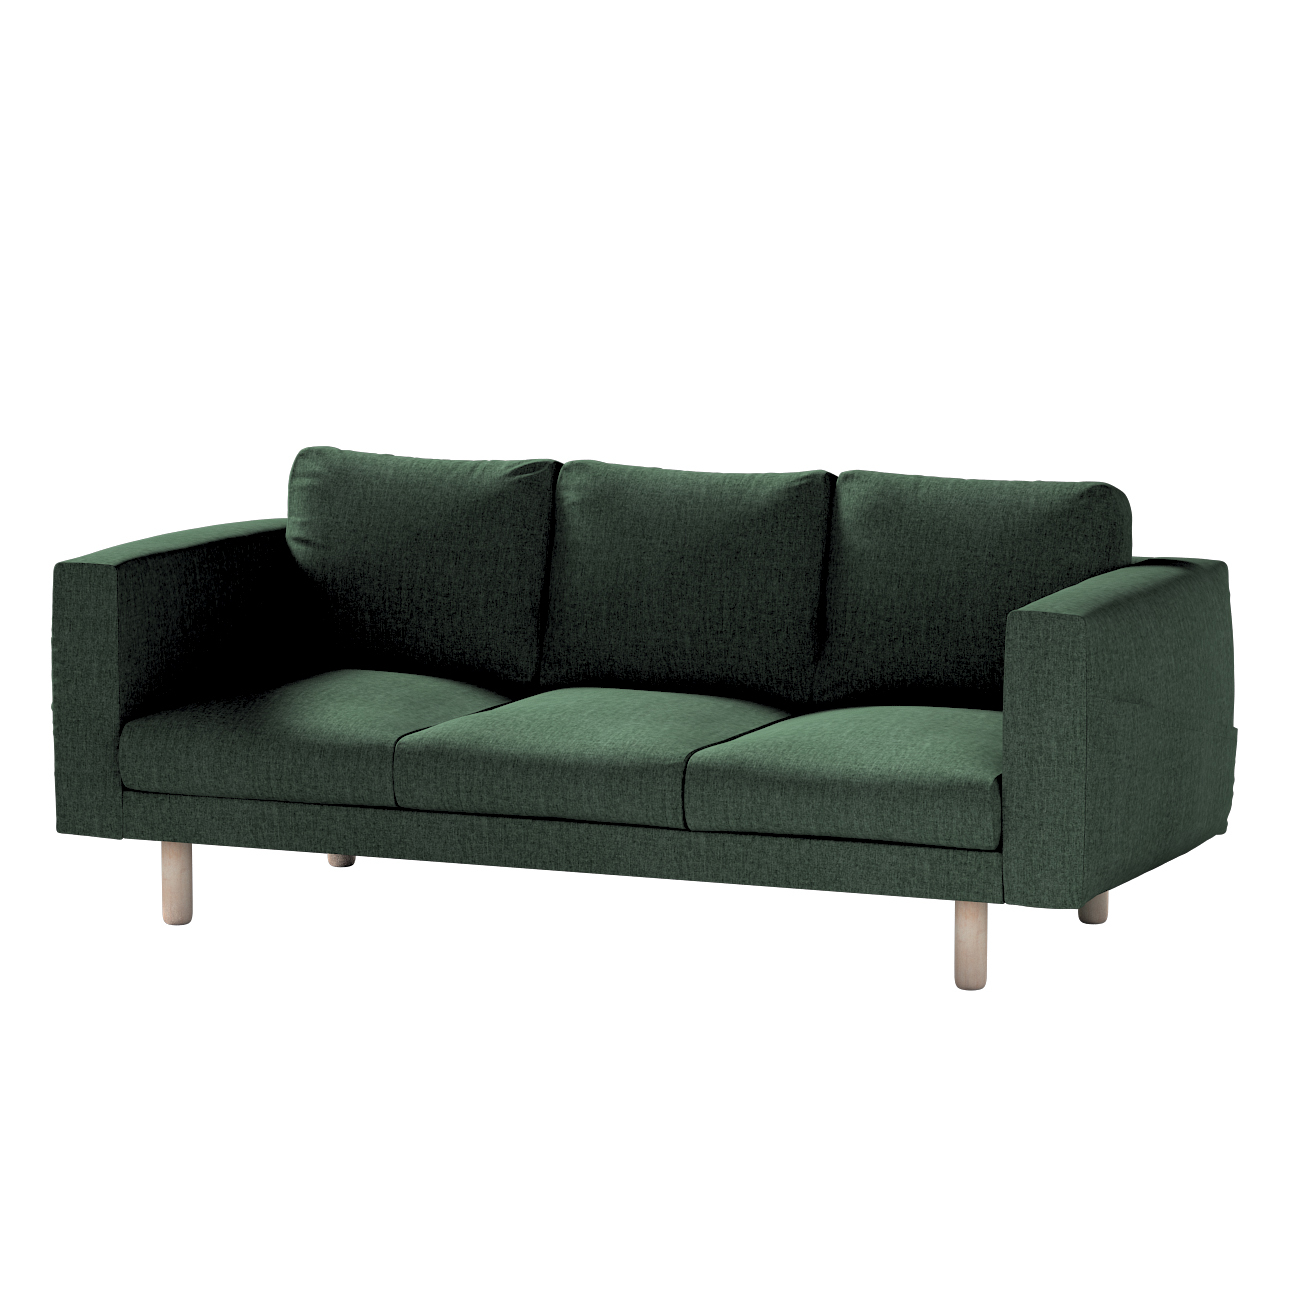 Bezug für Norsborg 3-Sitzer Sofa, dunkelgrün, Norsborg 3-Sitzer Sofabezug, günstig online kaufen